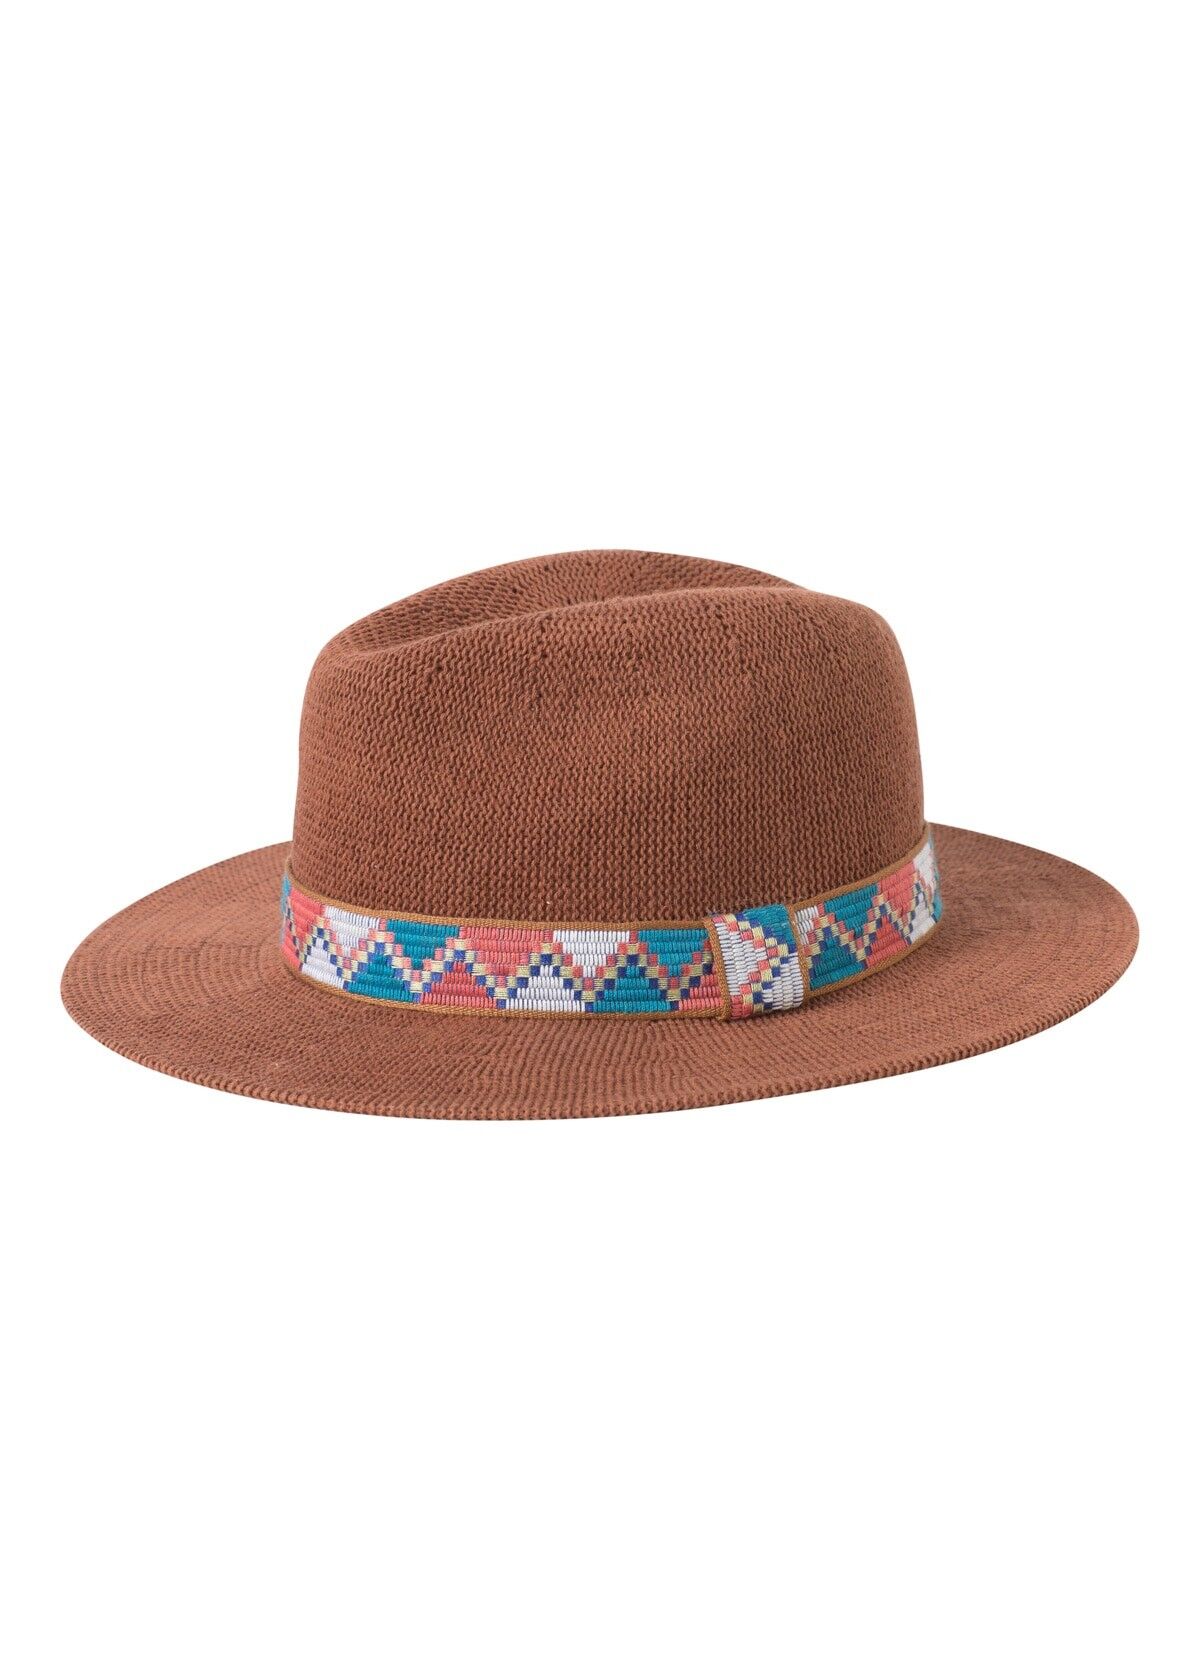 Prana Cybil Knit Fedora - Hat